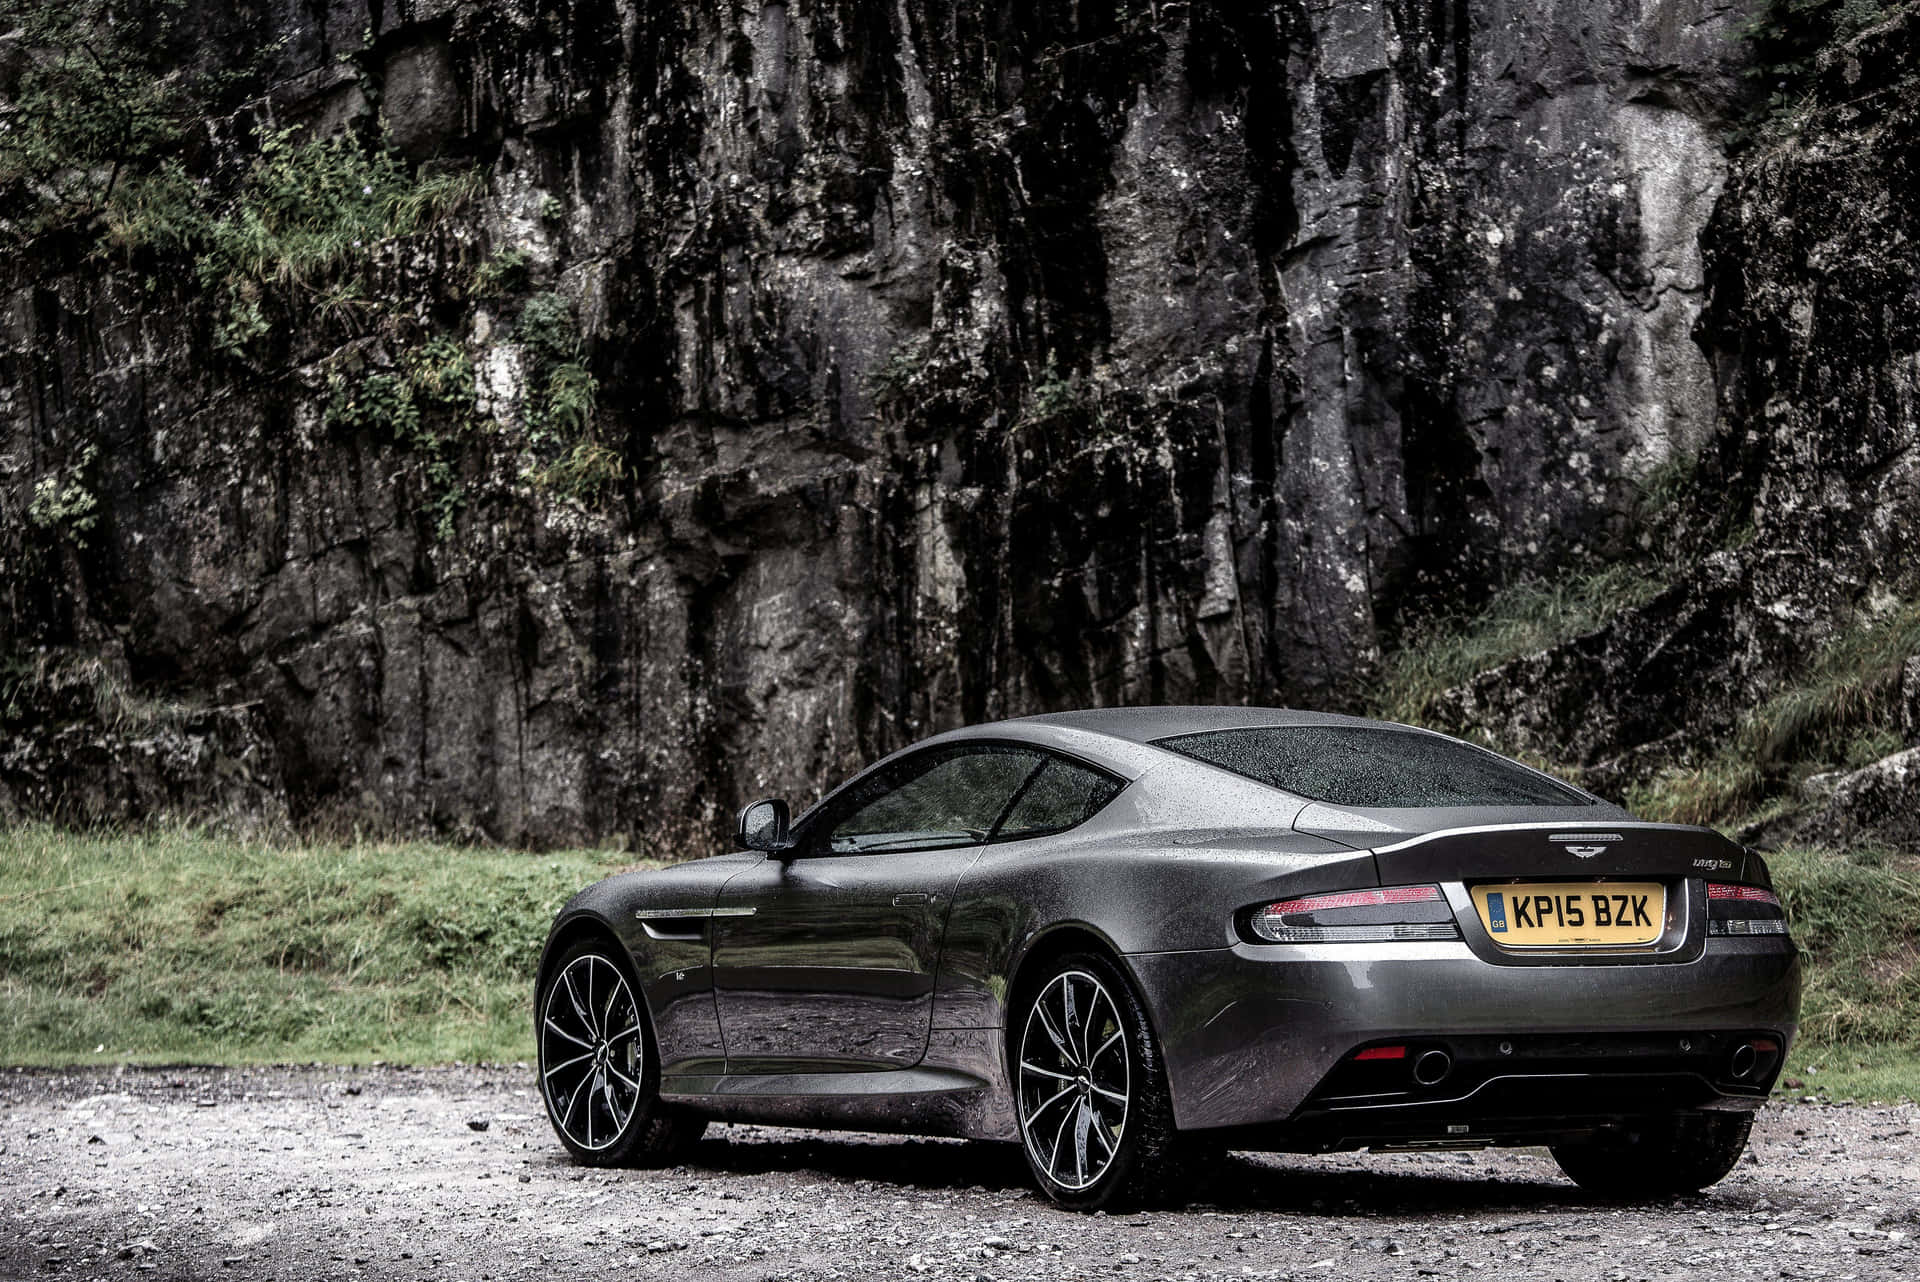 Stunning Aston Martin DB9 in Motion Wallpaper